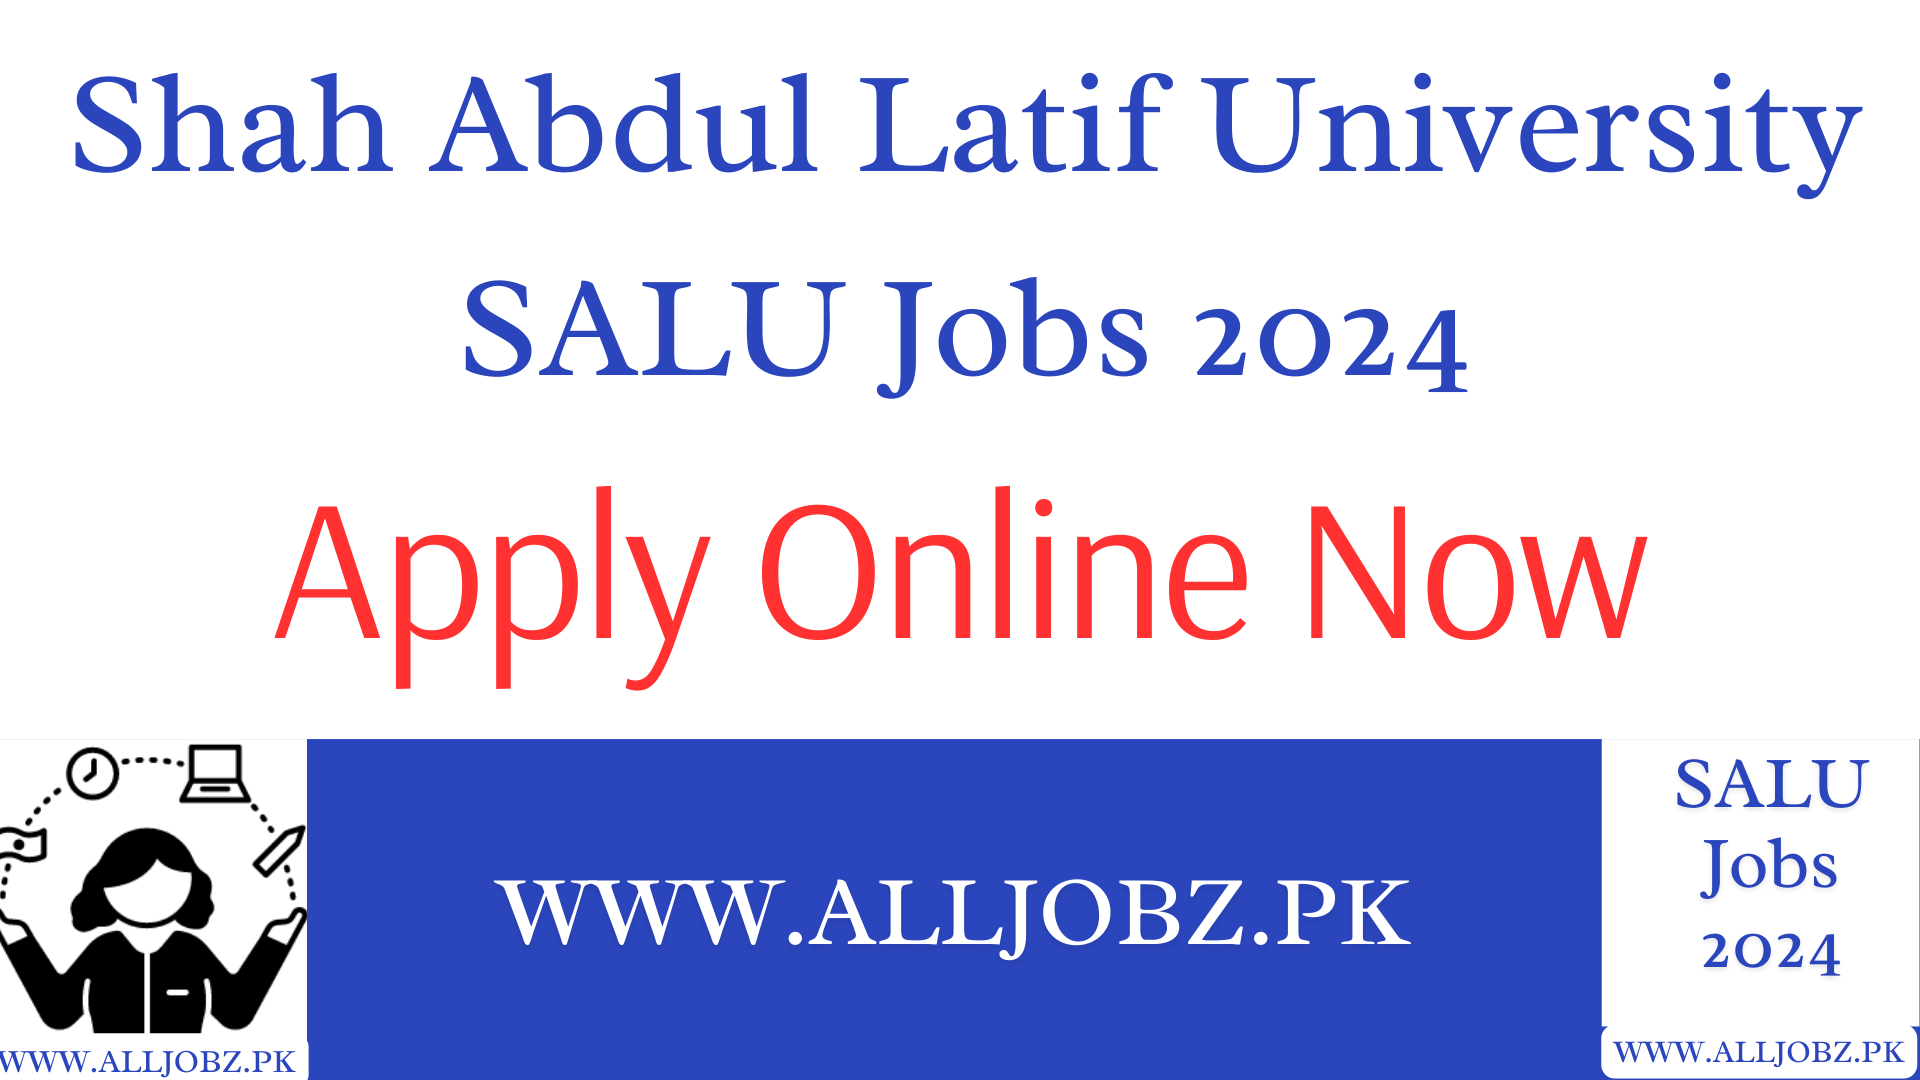 Shah Abdul Latif University Salu Jobs 2024, Shah Abdul Latif University Jobs 2024 Result, Shah Abdul Latif University Jobs 2024 Online Apply,